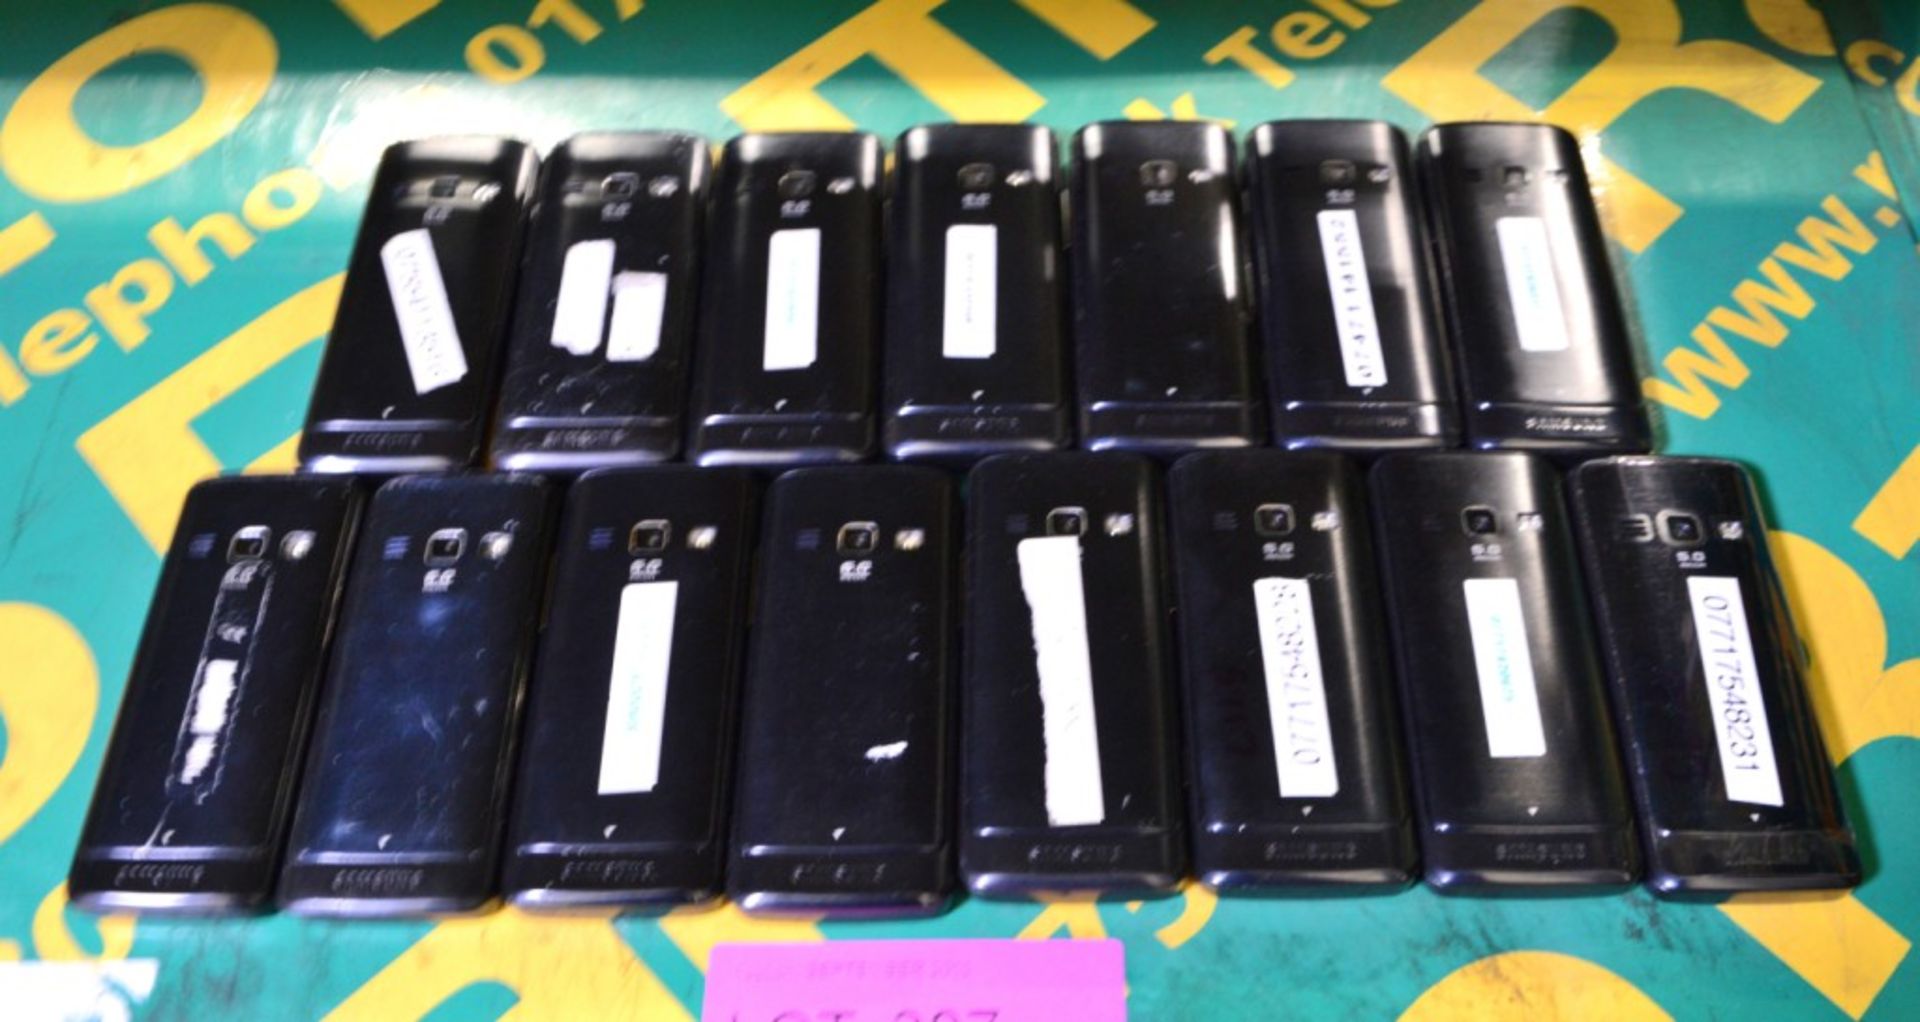 15x Samsung GT-S5611V Mobile Phones - Batteries & backs may be missing. - Image 2 of 2